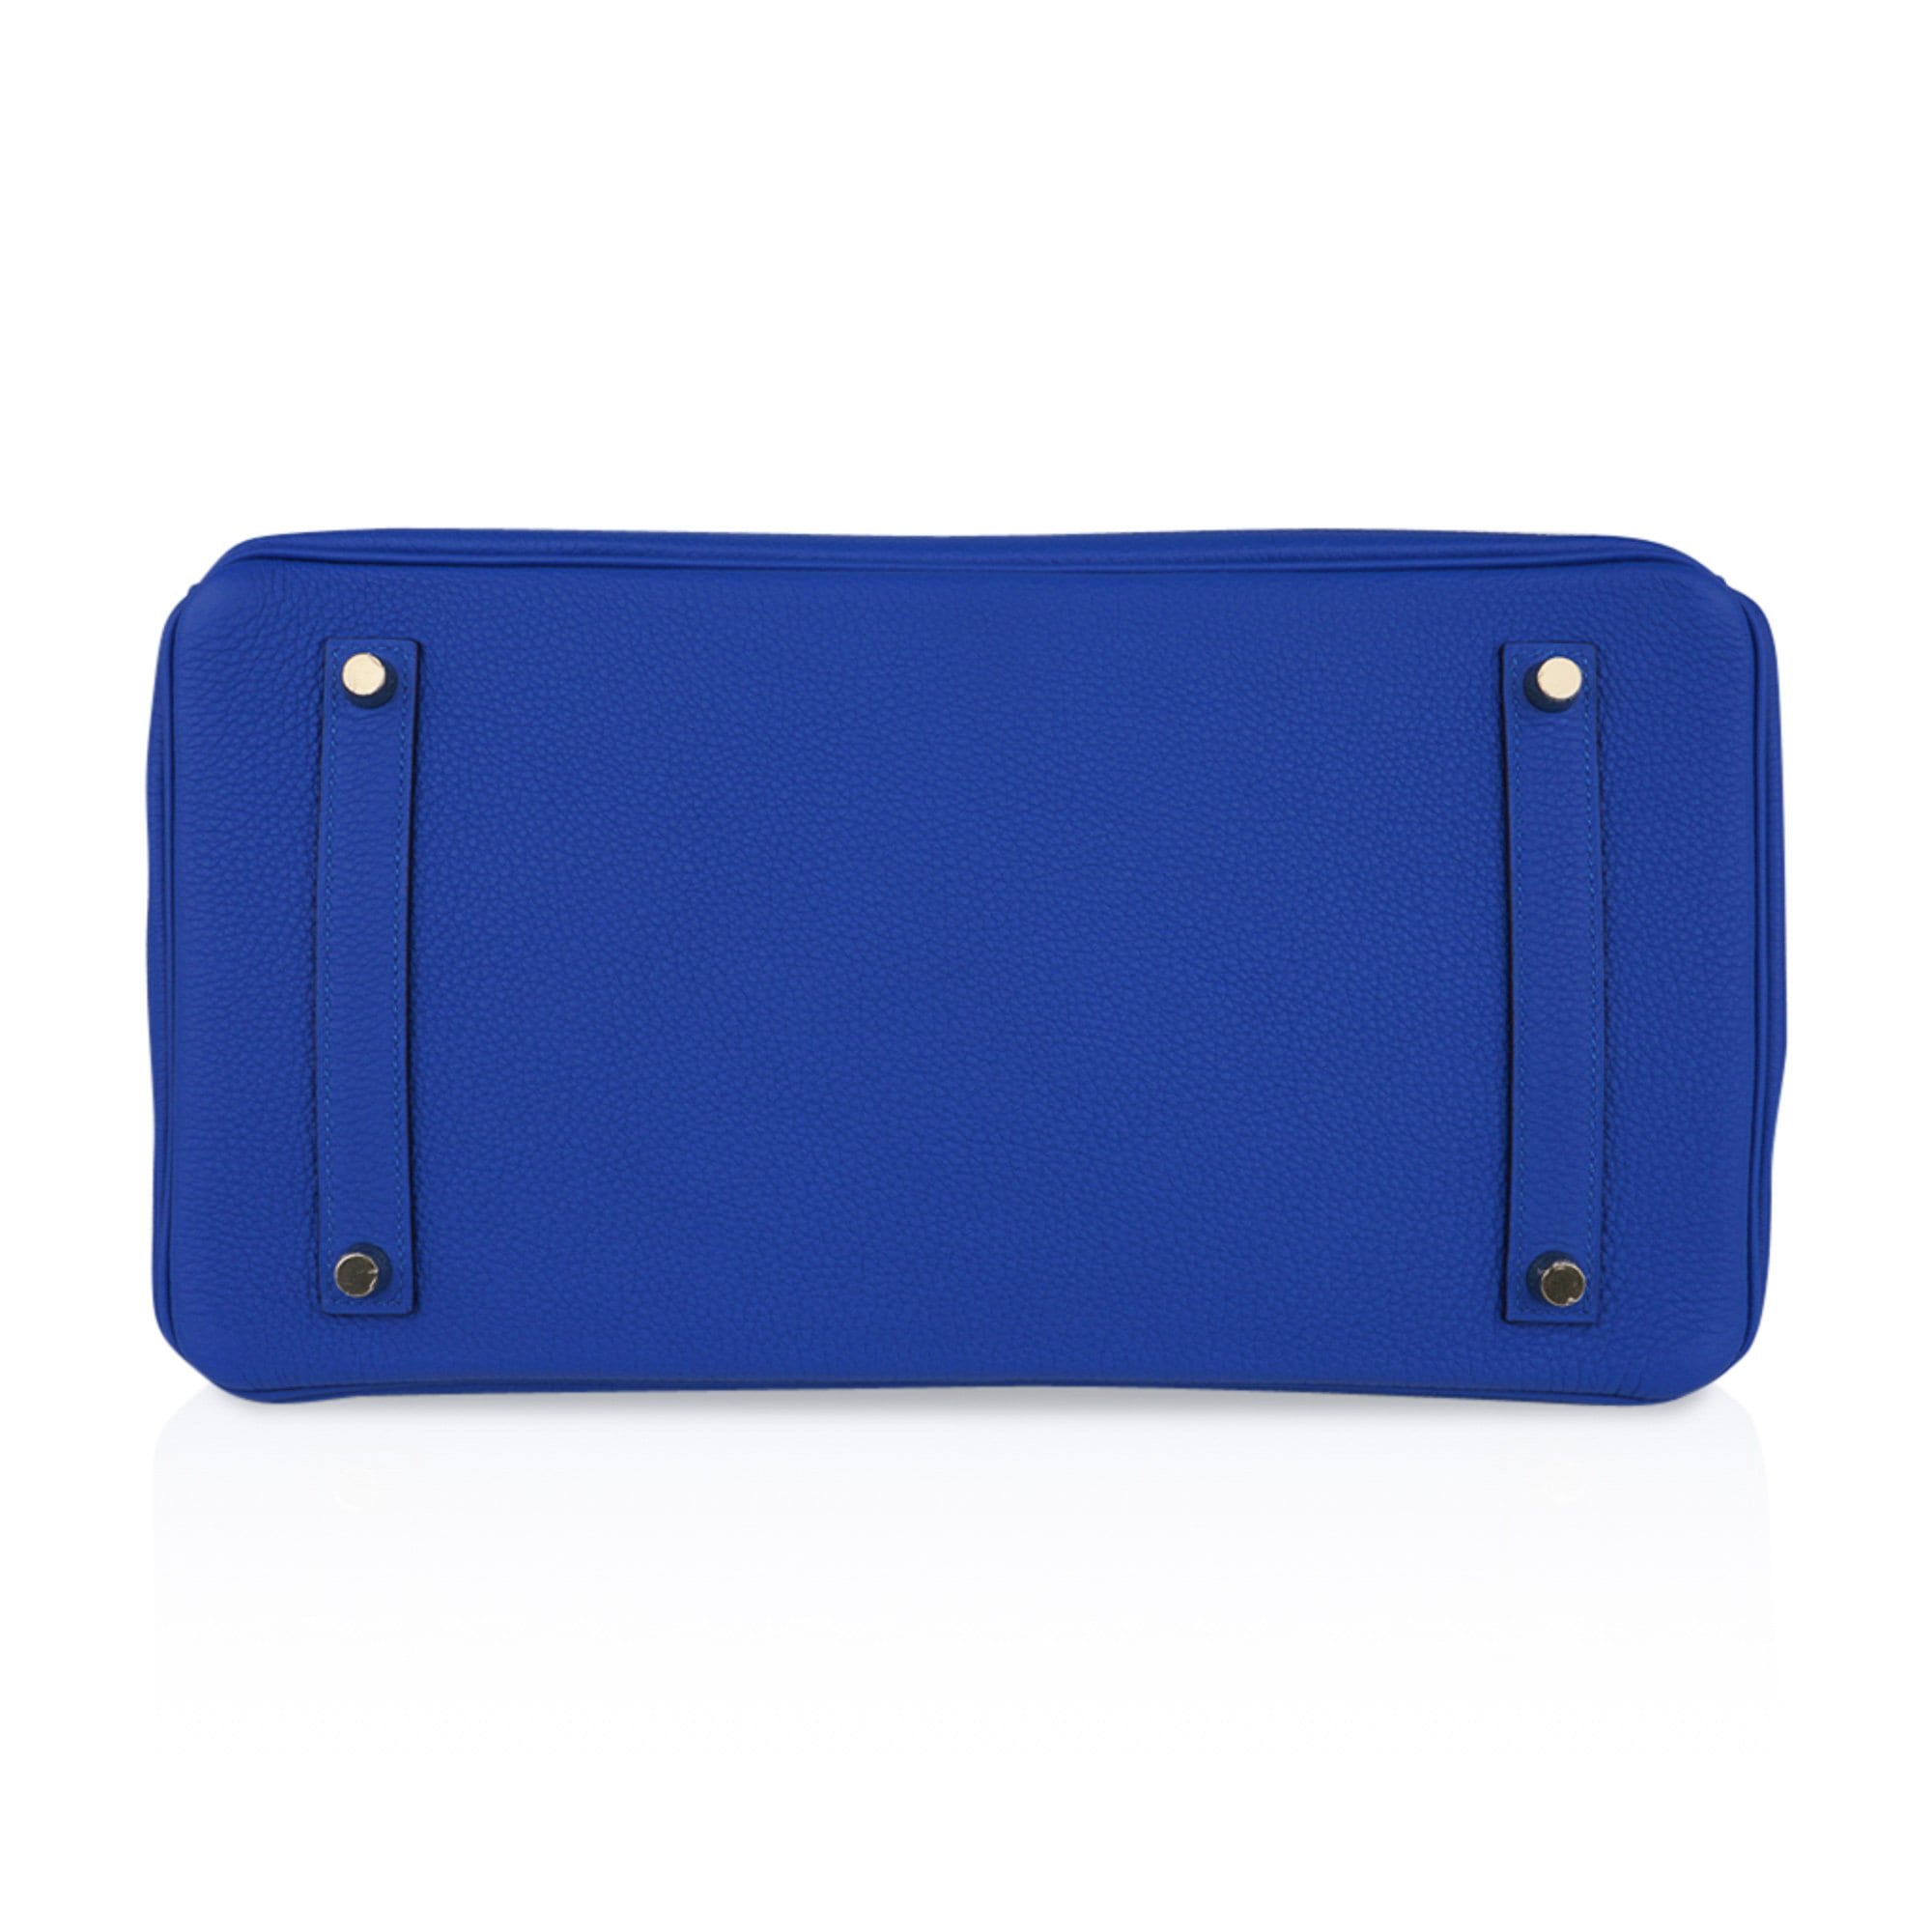 Hermès // Gold Birkin 35 Togo Leather Bag – VSP Consignment